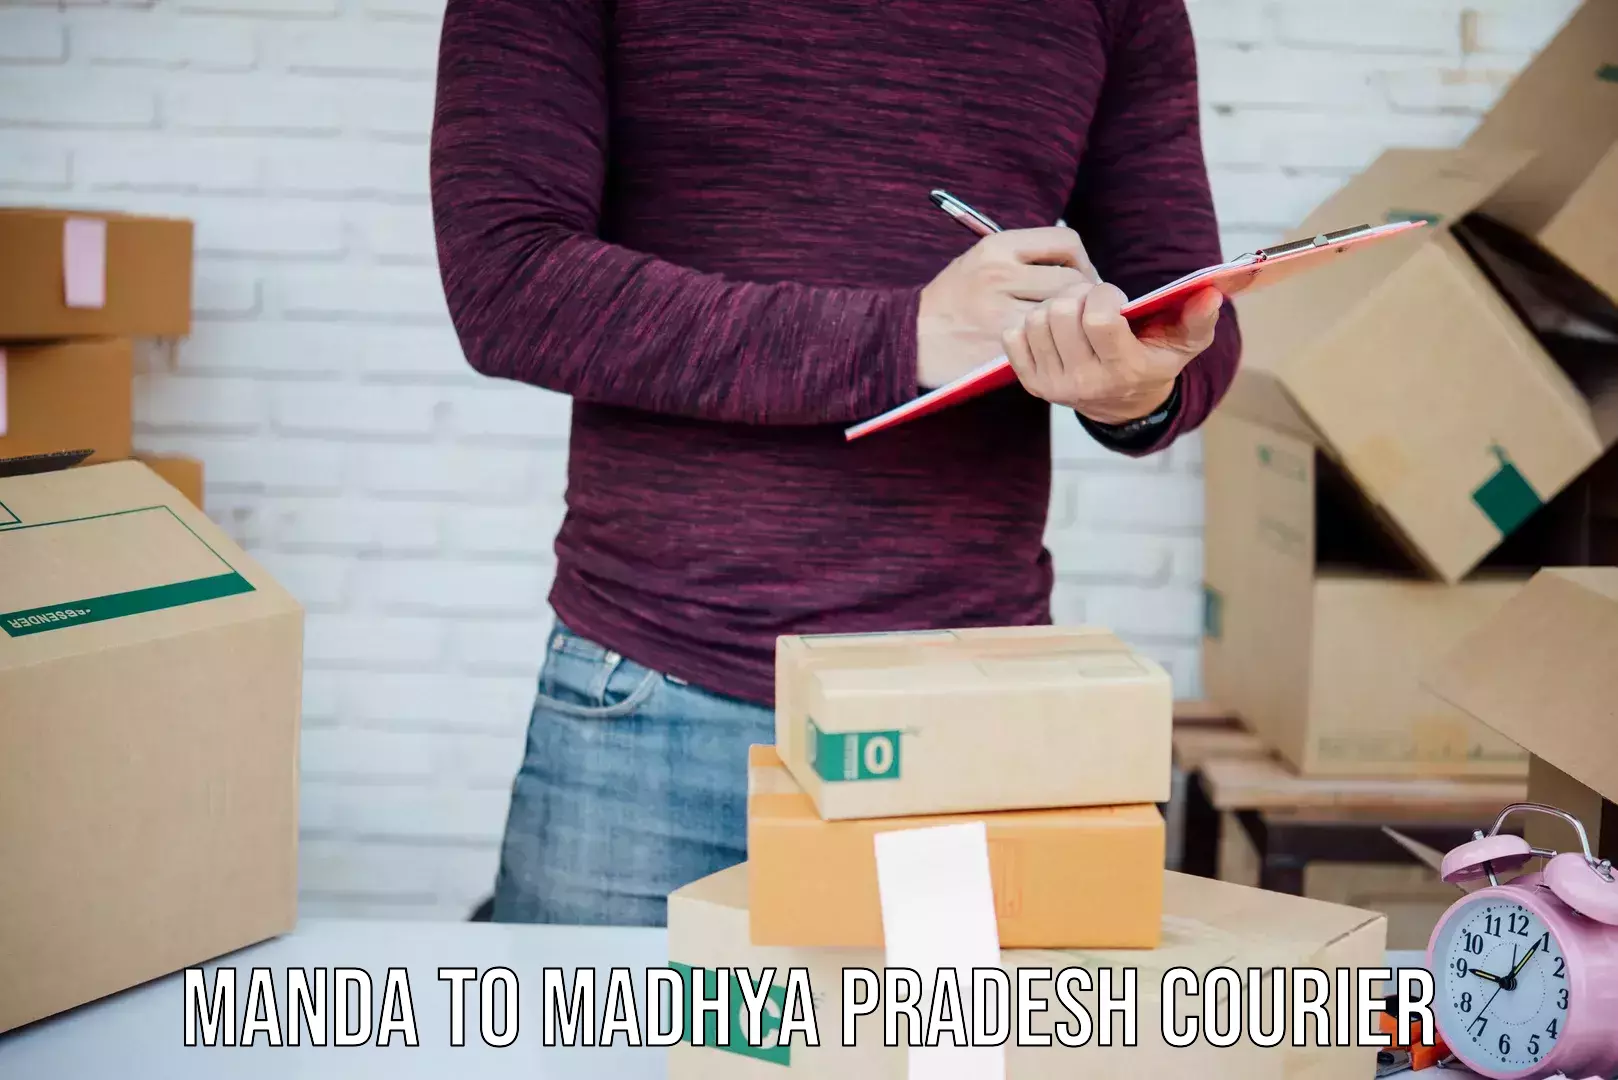 User-friendly delivery service Manda to Amarwara